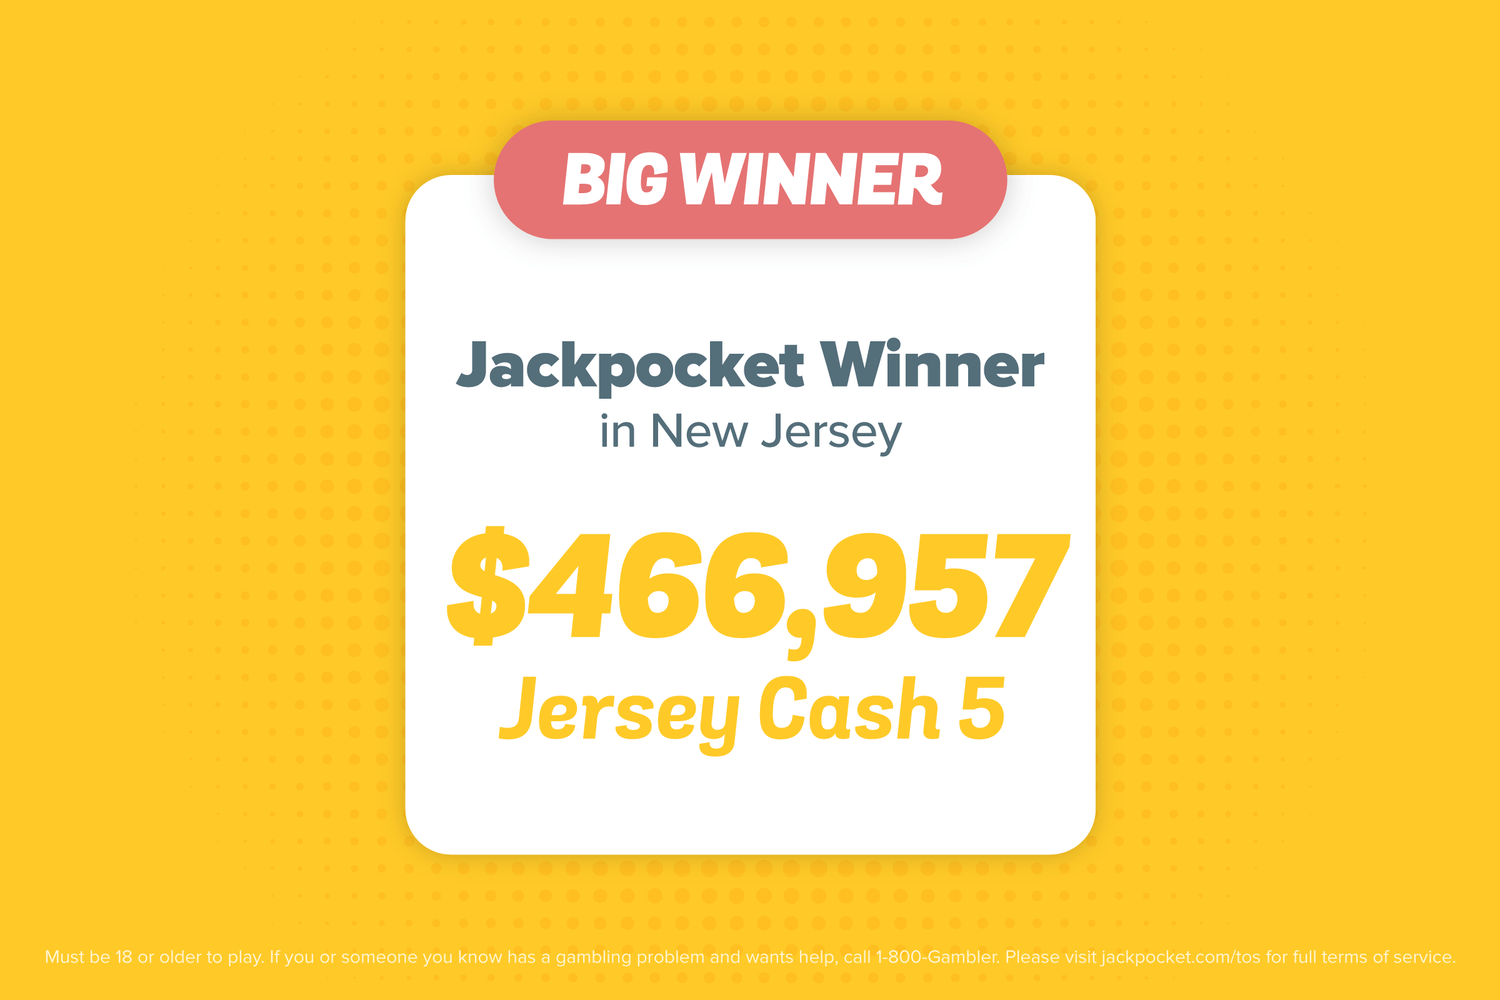 Jersey Cash 5 jackpot win